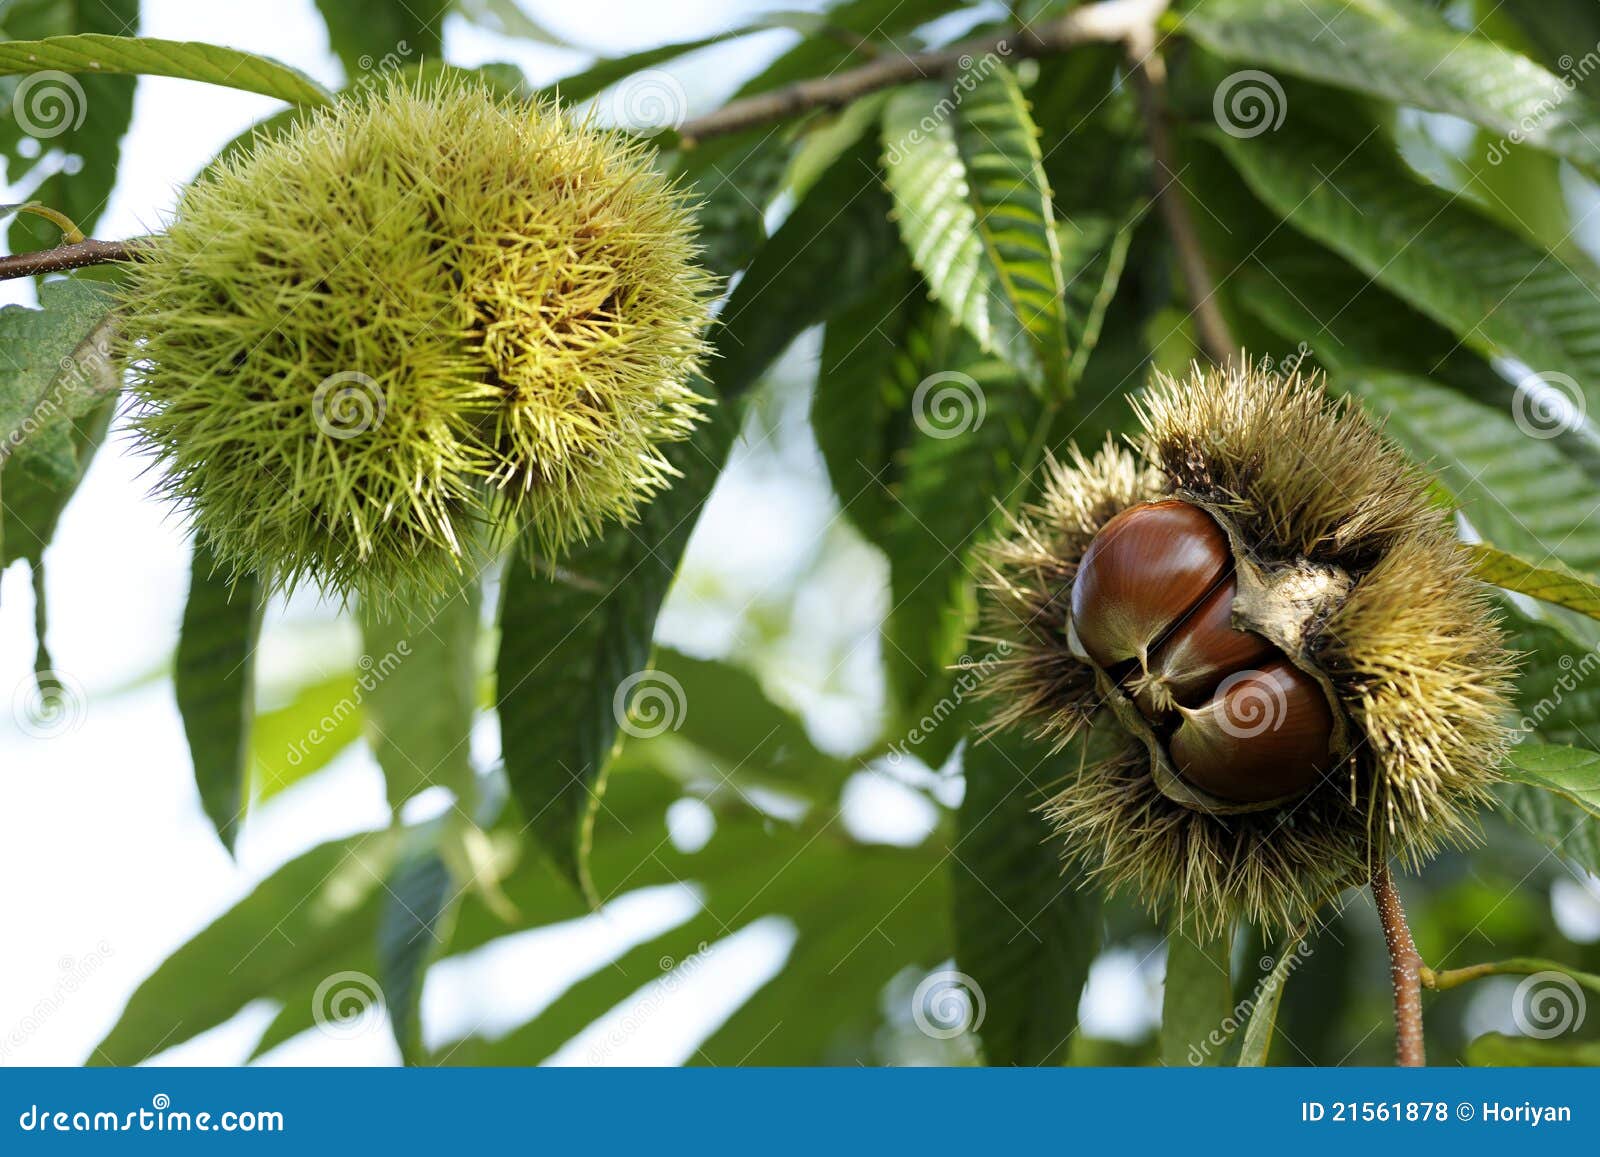 chestnut with bur